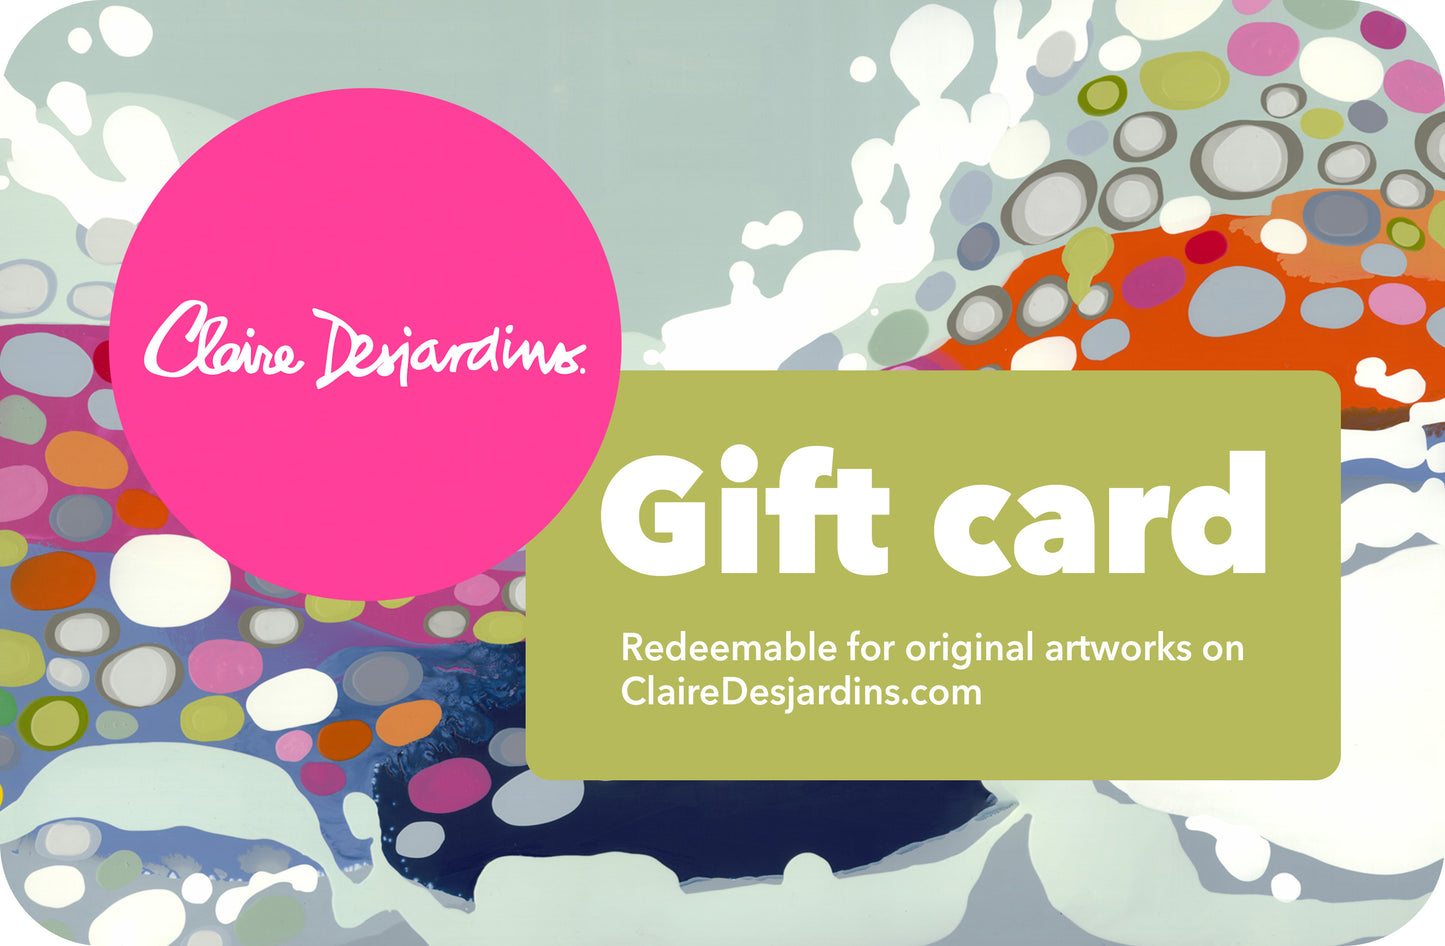 Gift cards for original artworks by Claire Desjardins